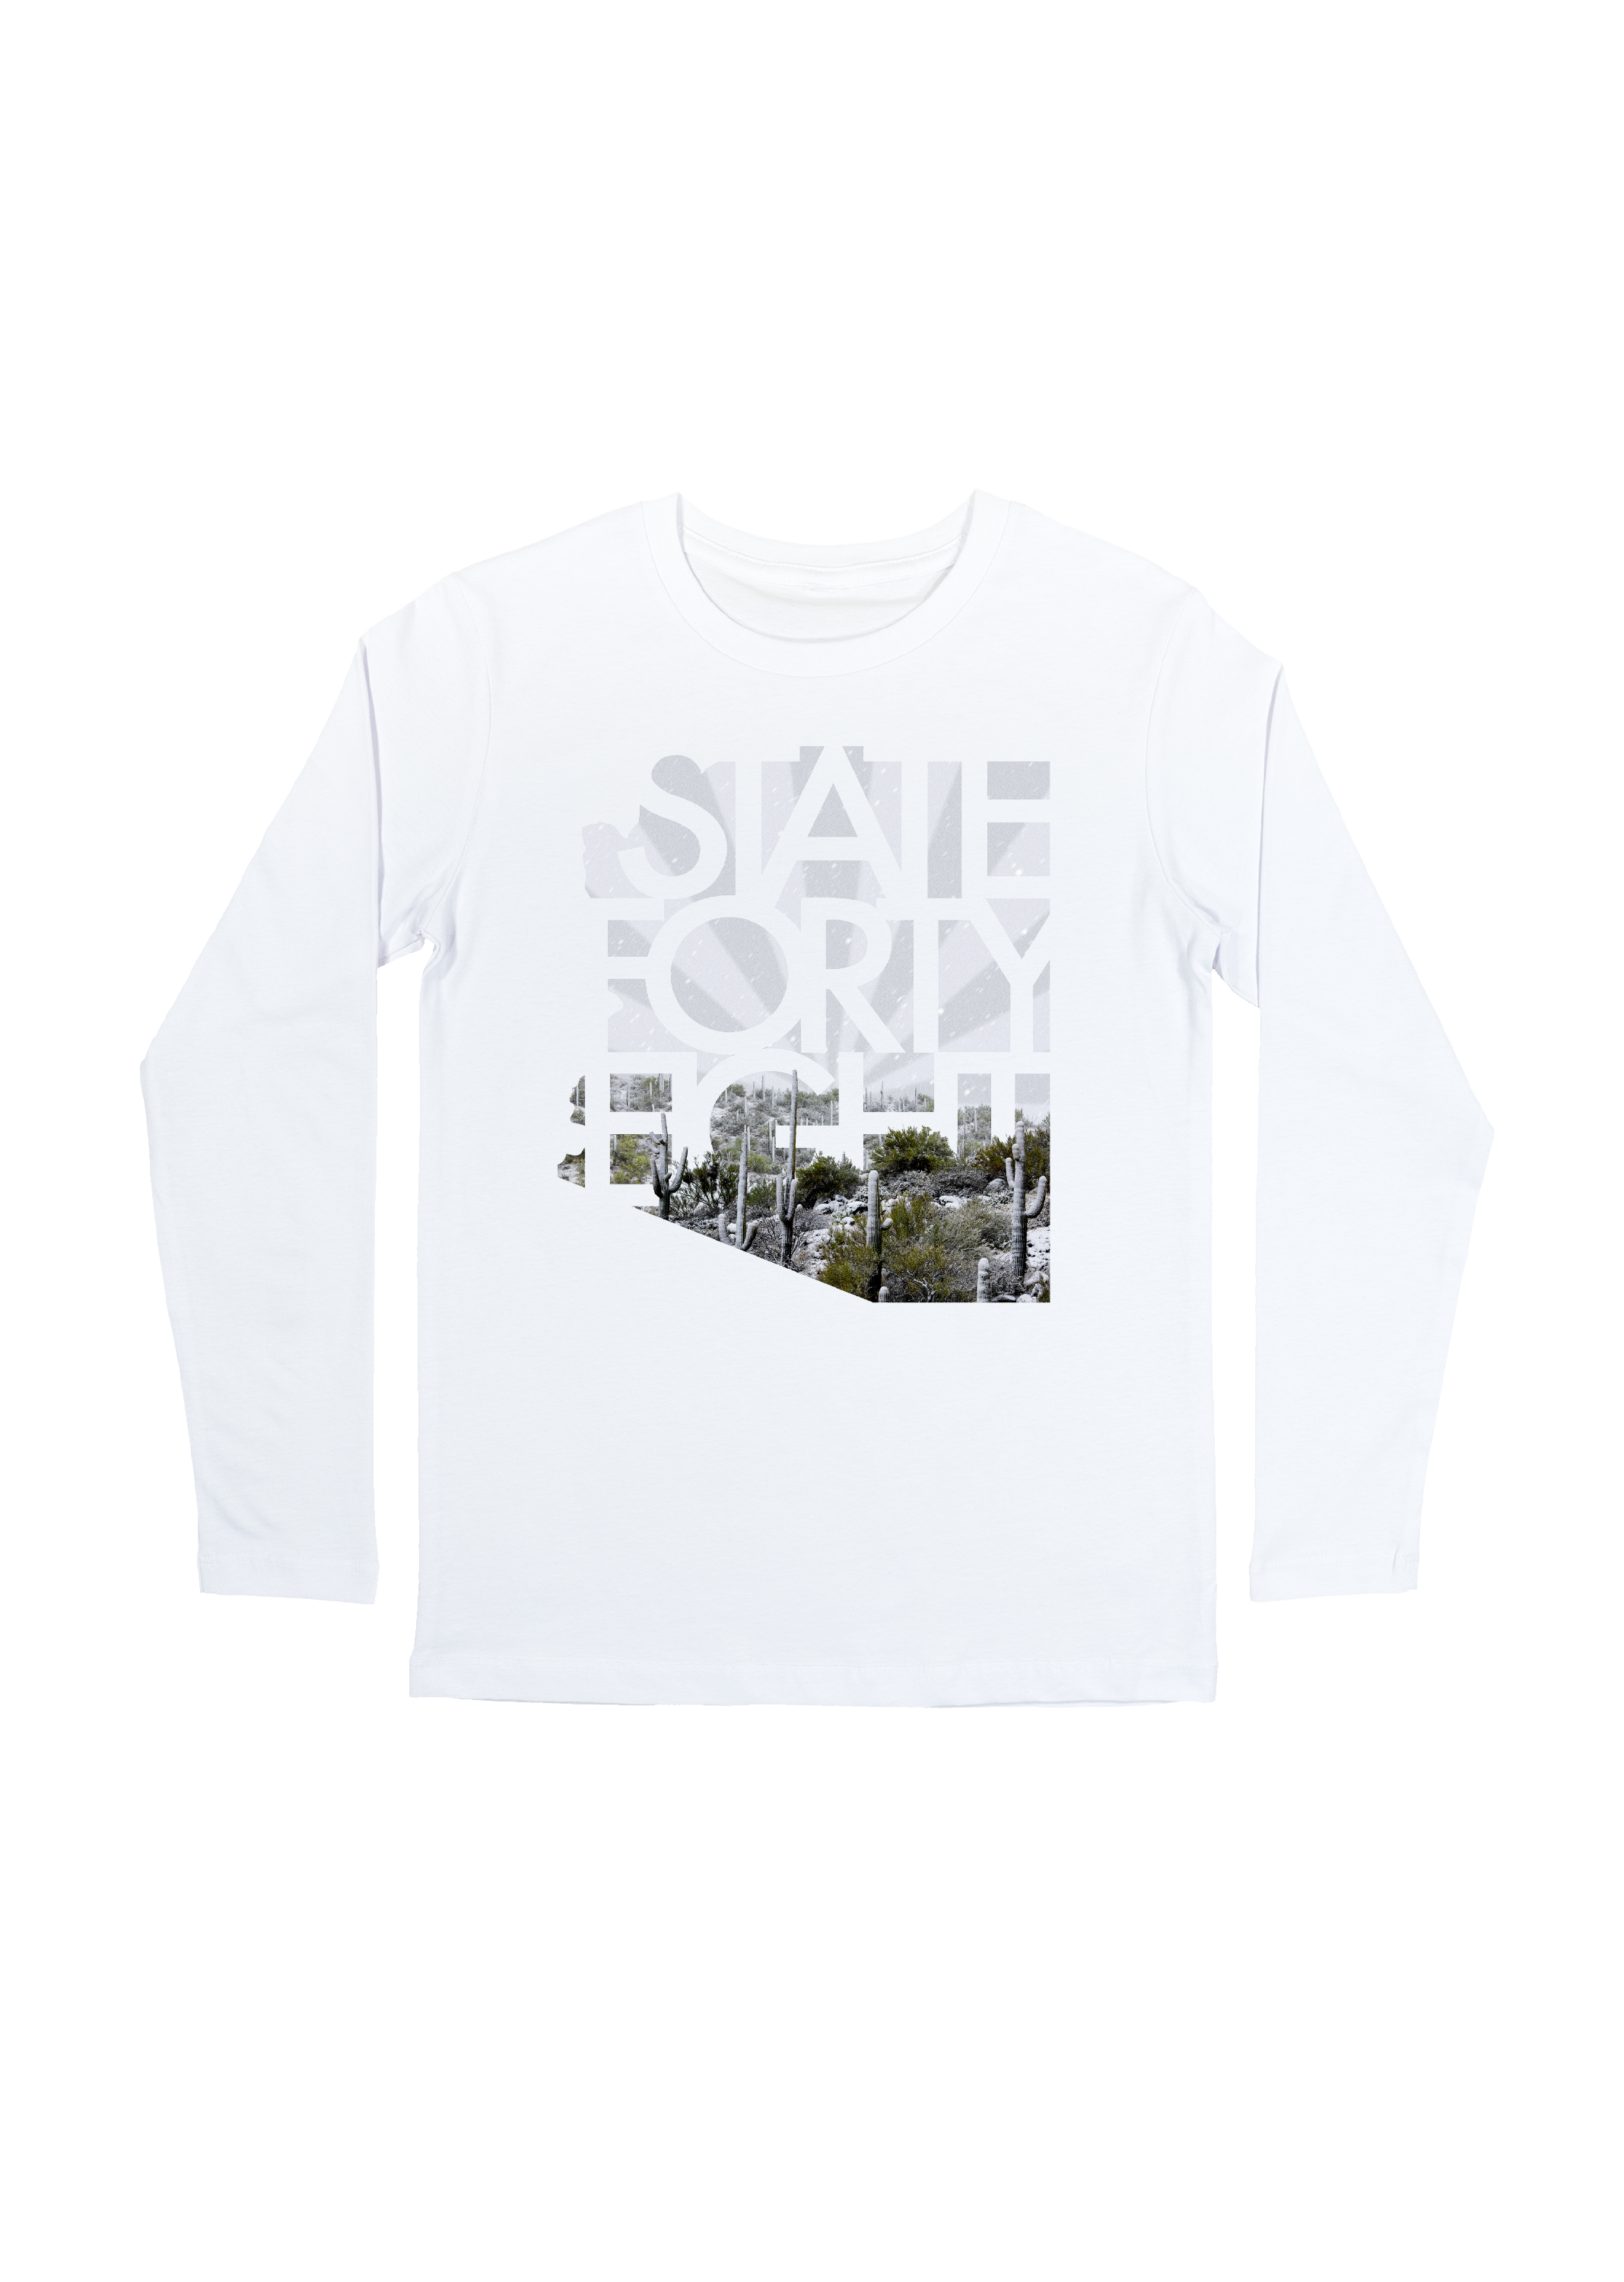 Serrano’s State Forty Eight Centennial T-Shirt